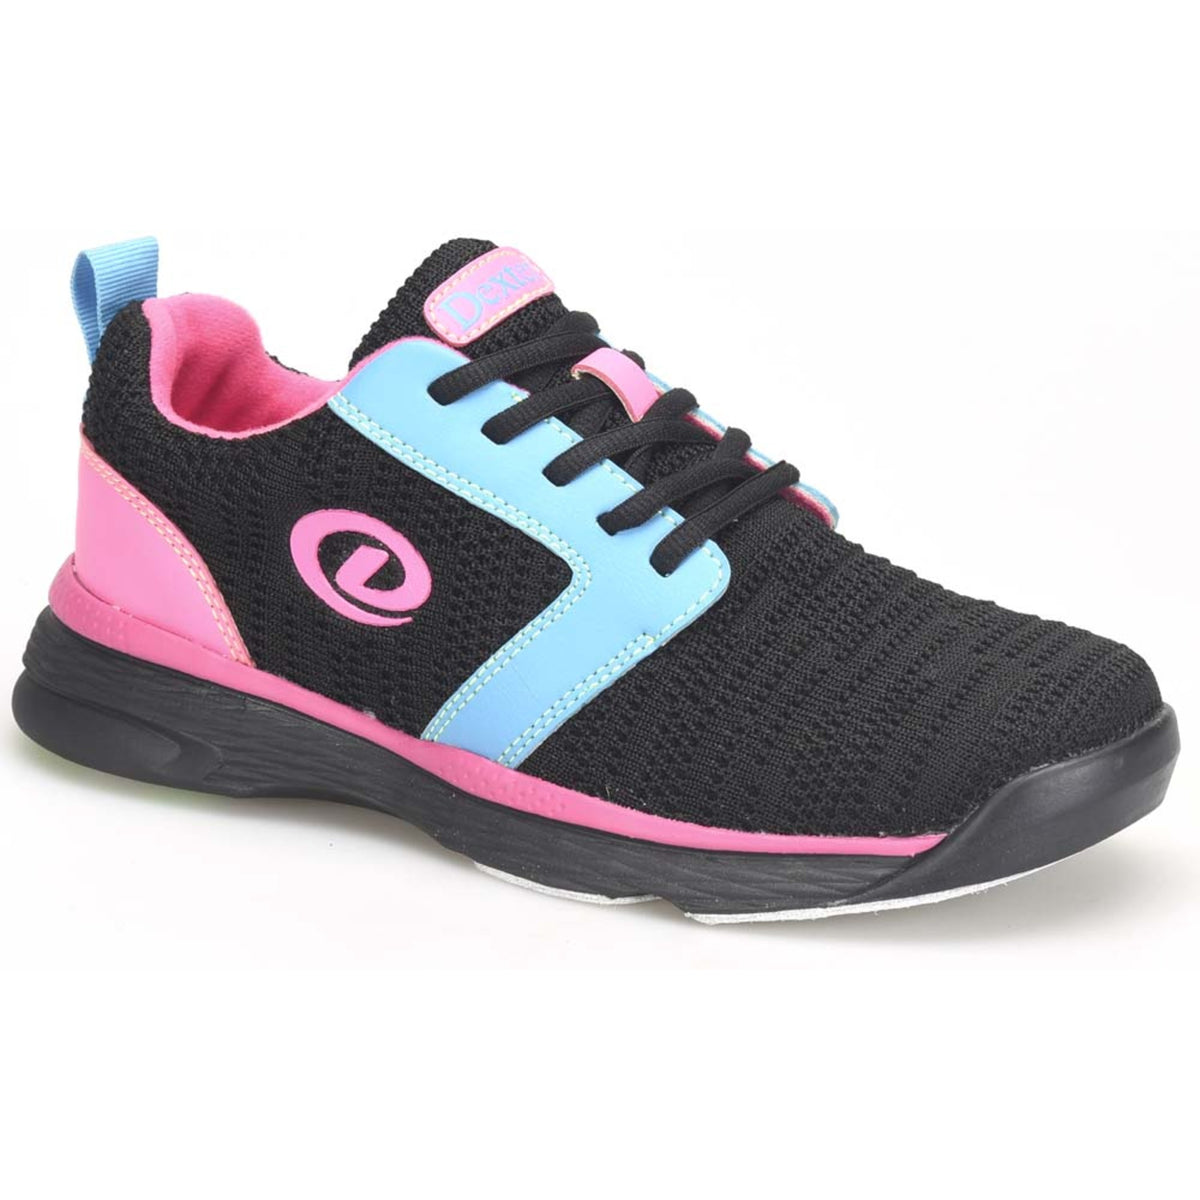 Raquel Lx Black/Blue/Pink Shoes